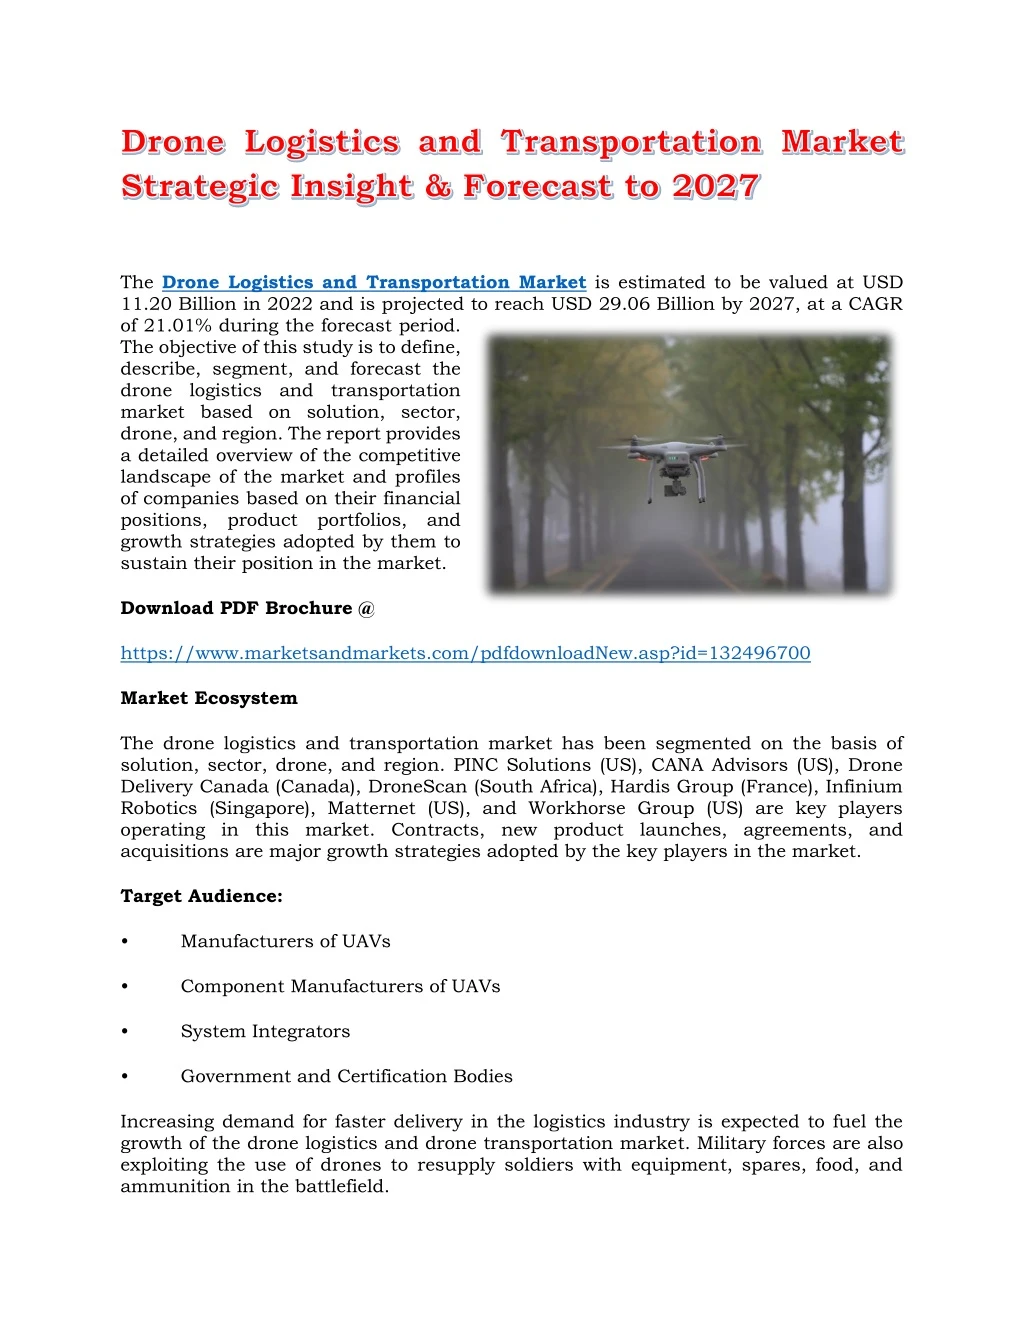 the drone logistics and transportation market